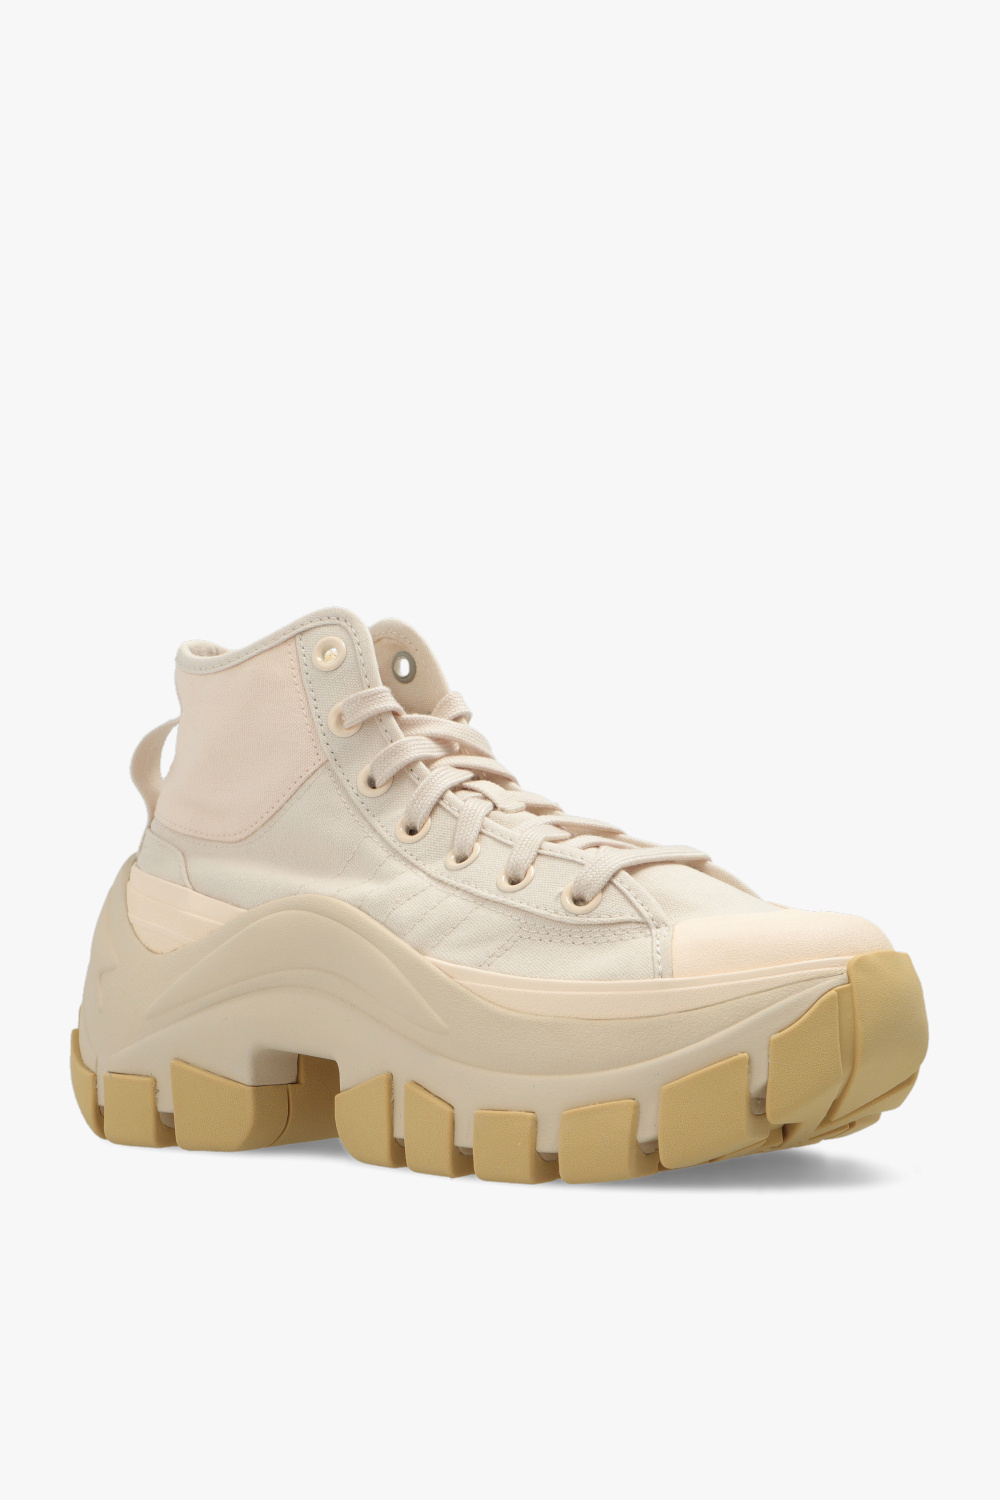 adidas kaki Originals ‘Nizza High XY22’ boots